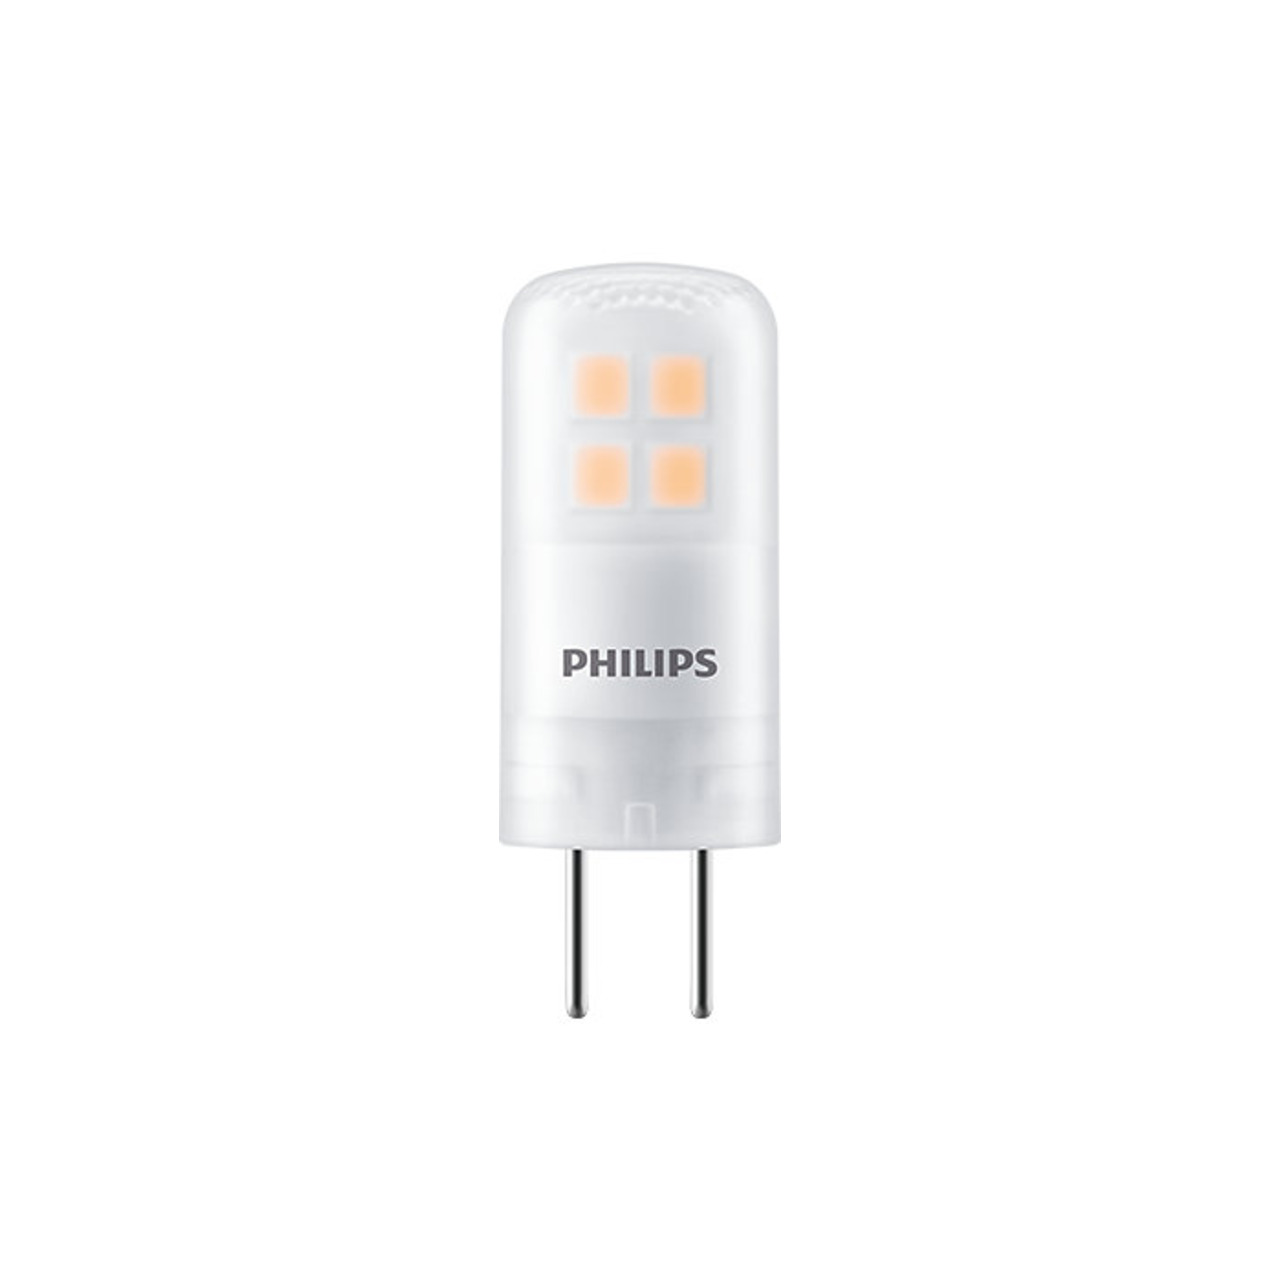 Philips 1-8-W-G4-LED-Lampe CorePro LEDcapsule- 205 lm- nicht dimmbar- warmweiss